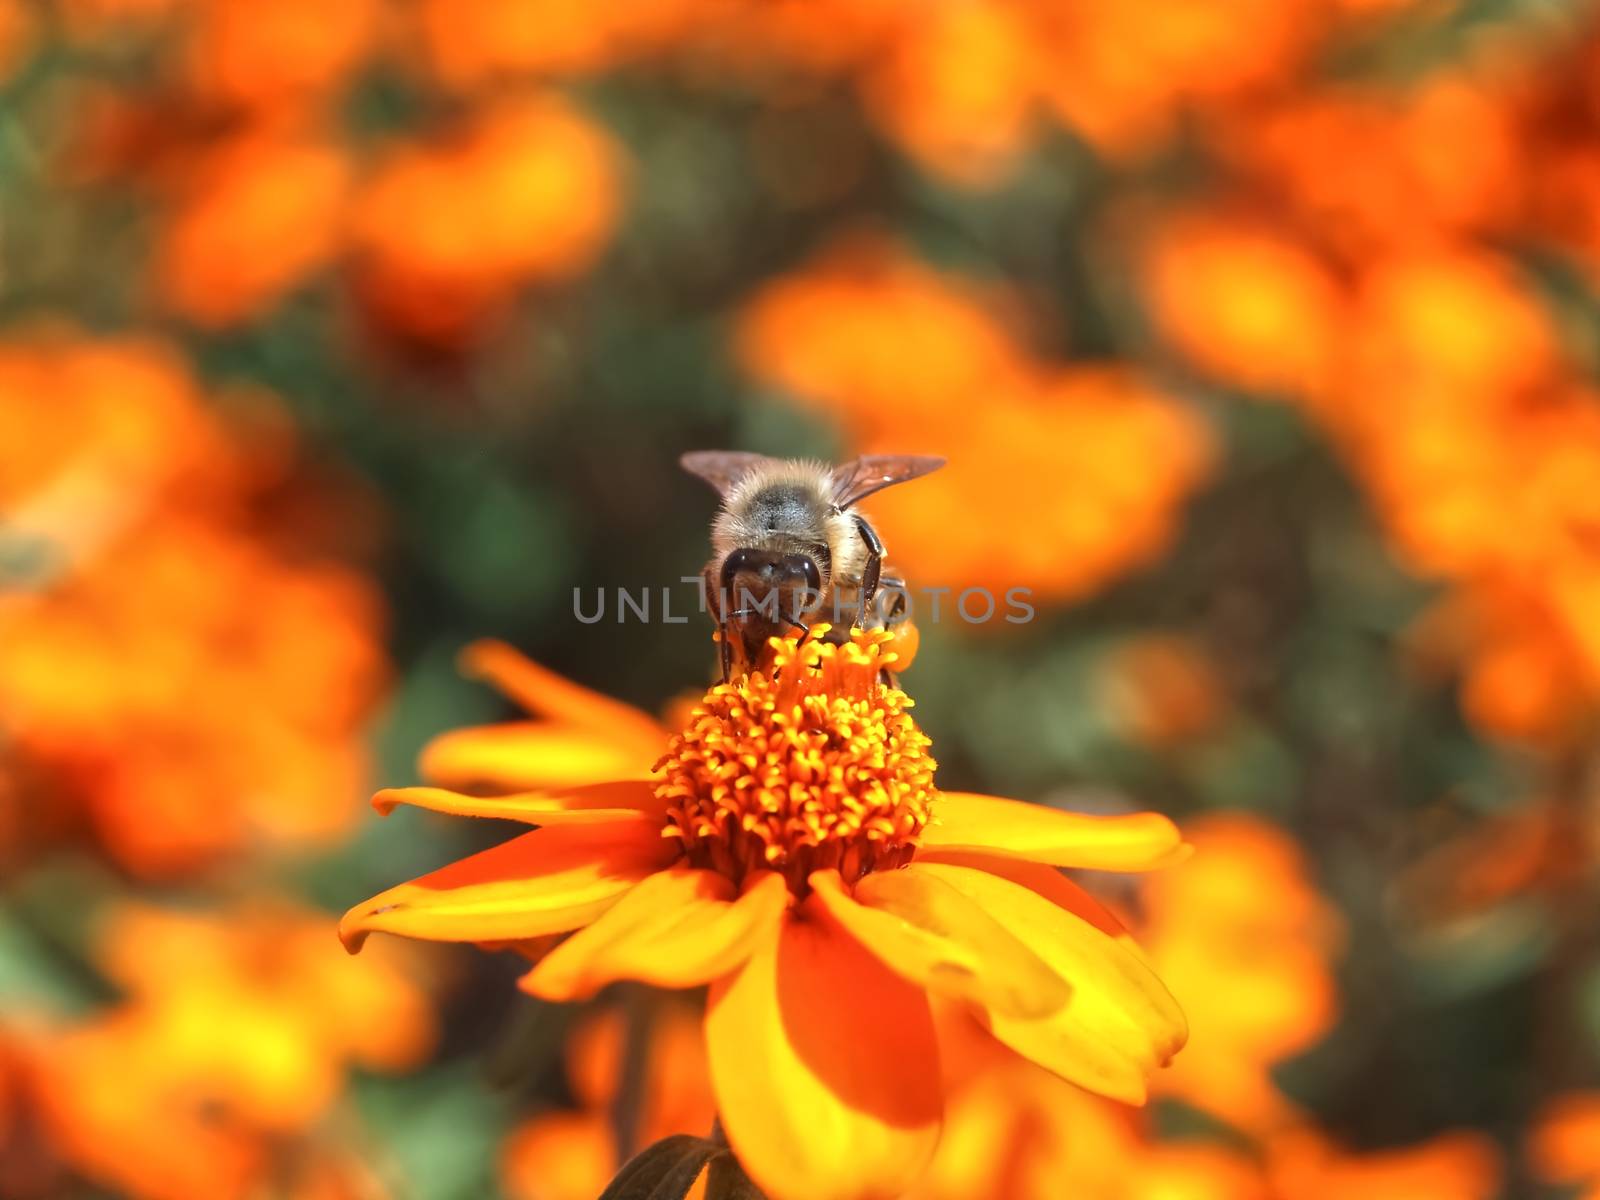 Closeup of a honey bee collecting pollen on orange zinnia flowers by Stimmungsbilder